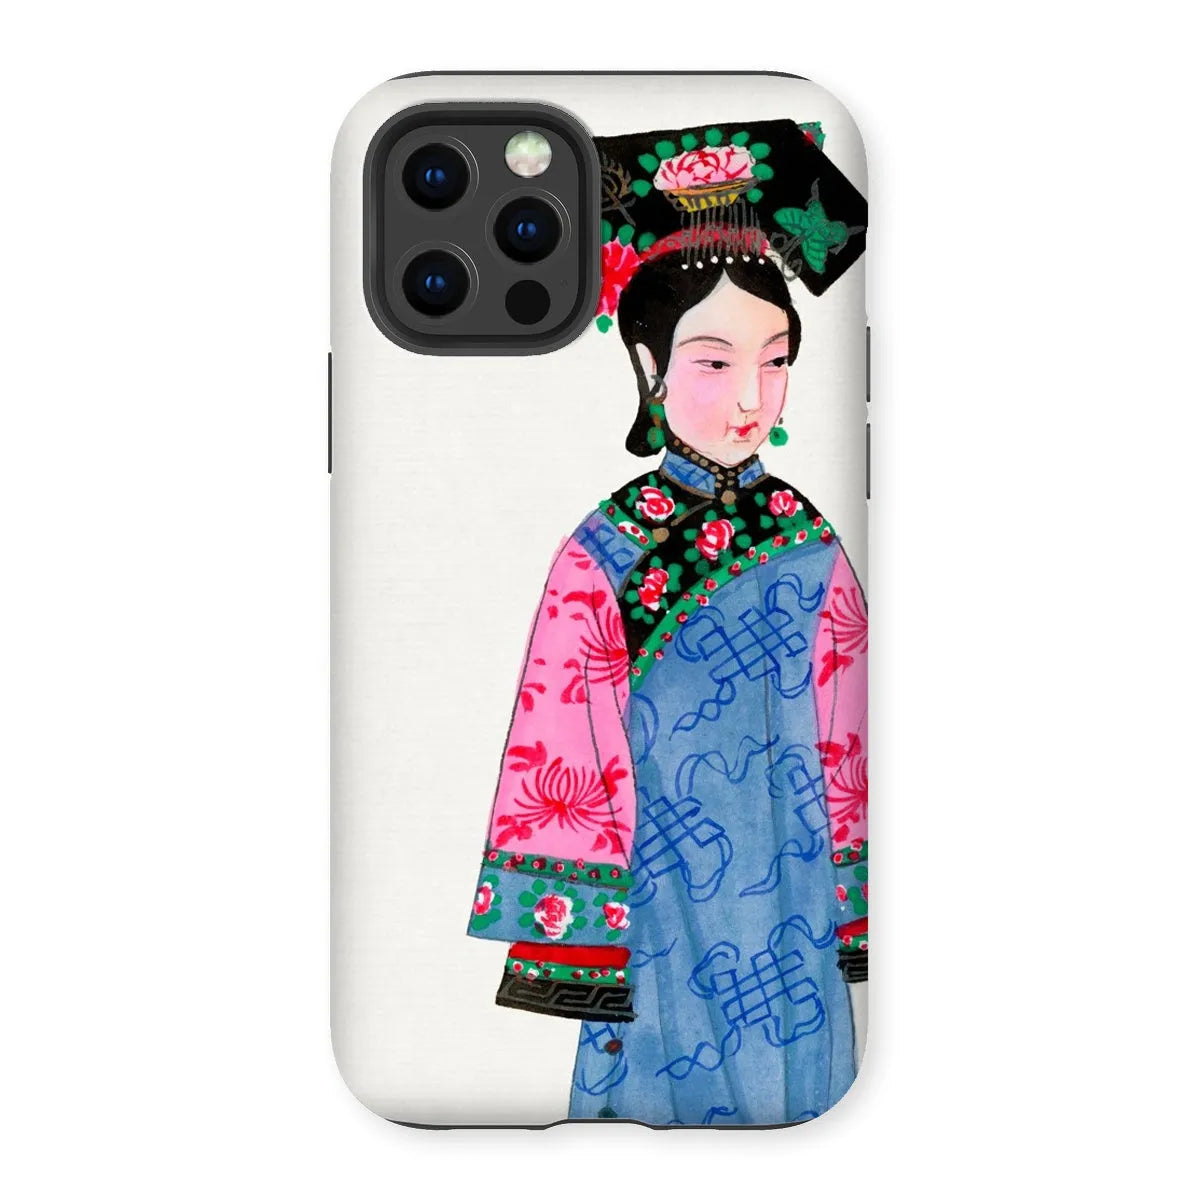 Noblewoman Too - Manchu Aesthetic Art Phone Case - Iphone 12 Pro / Matte - Mobile Phone Cases - Aesthetic Art